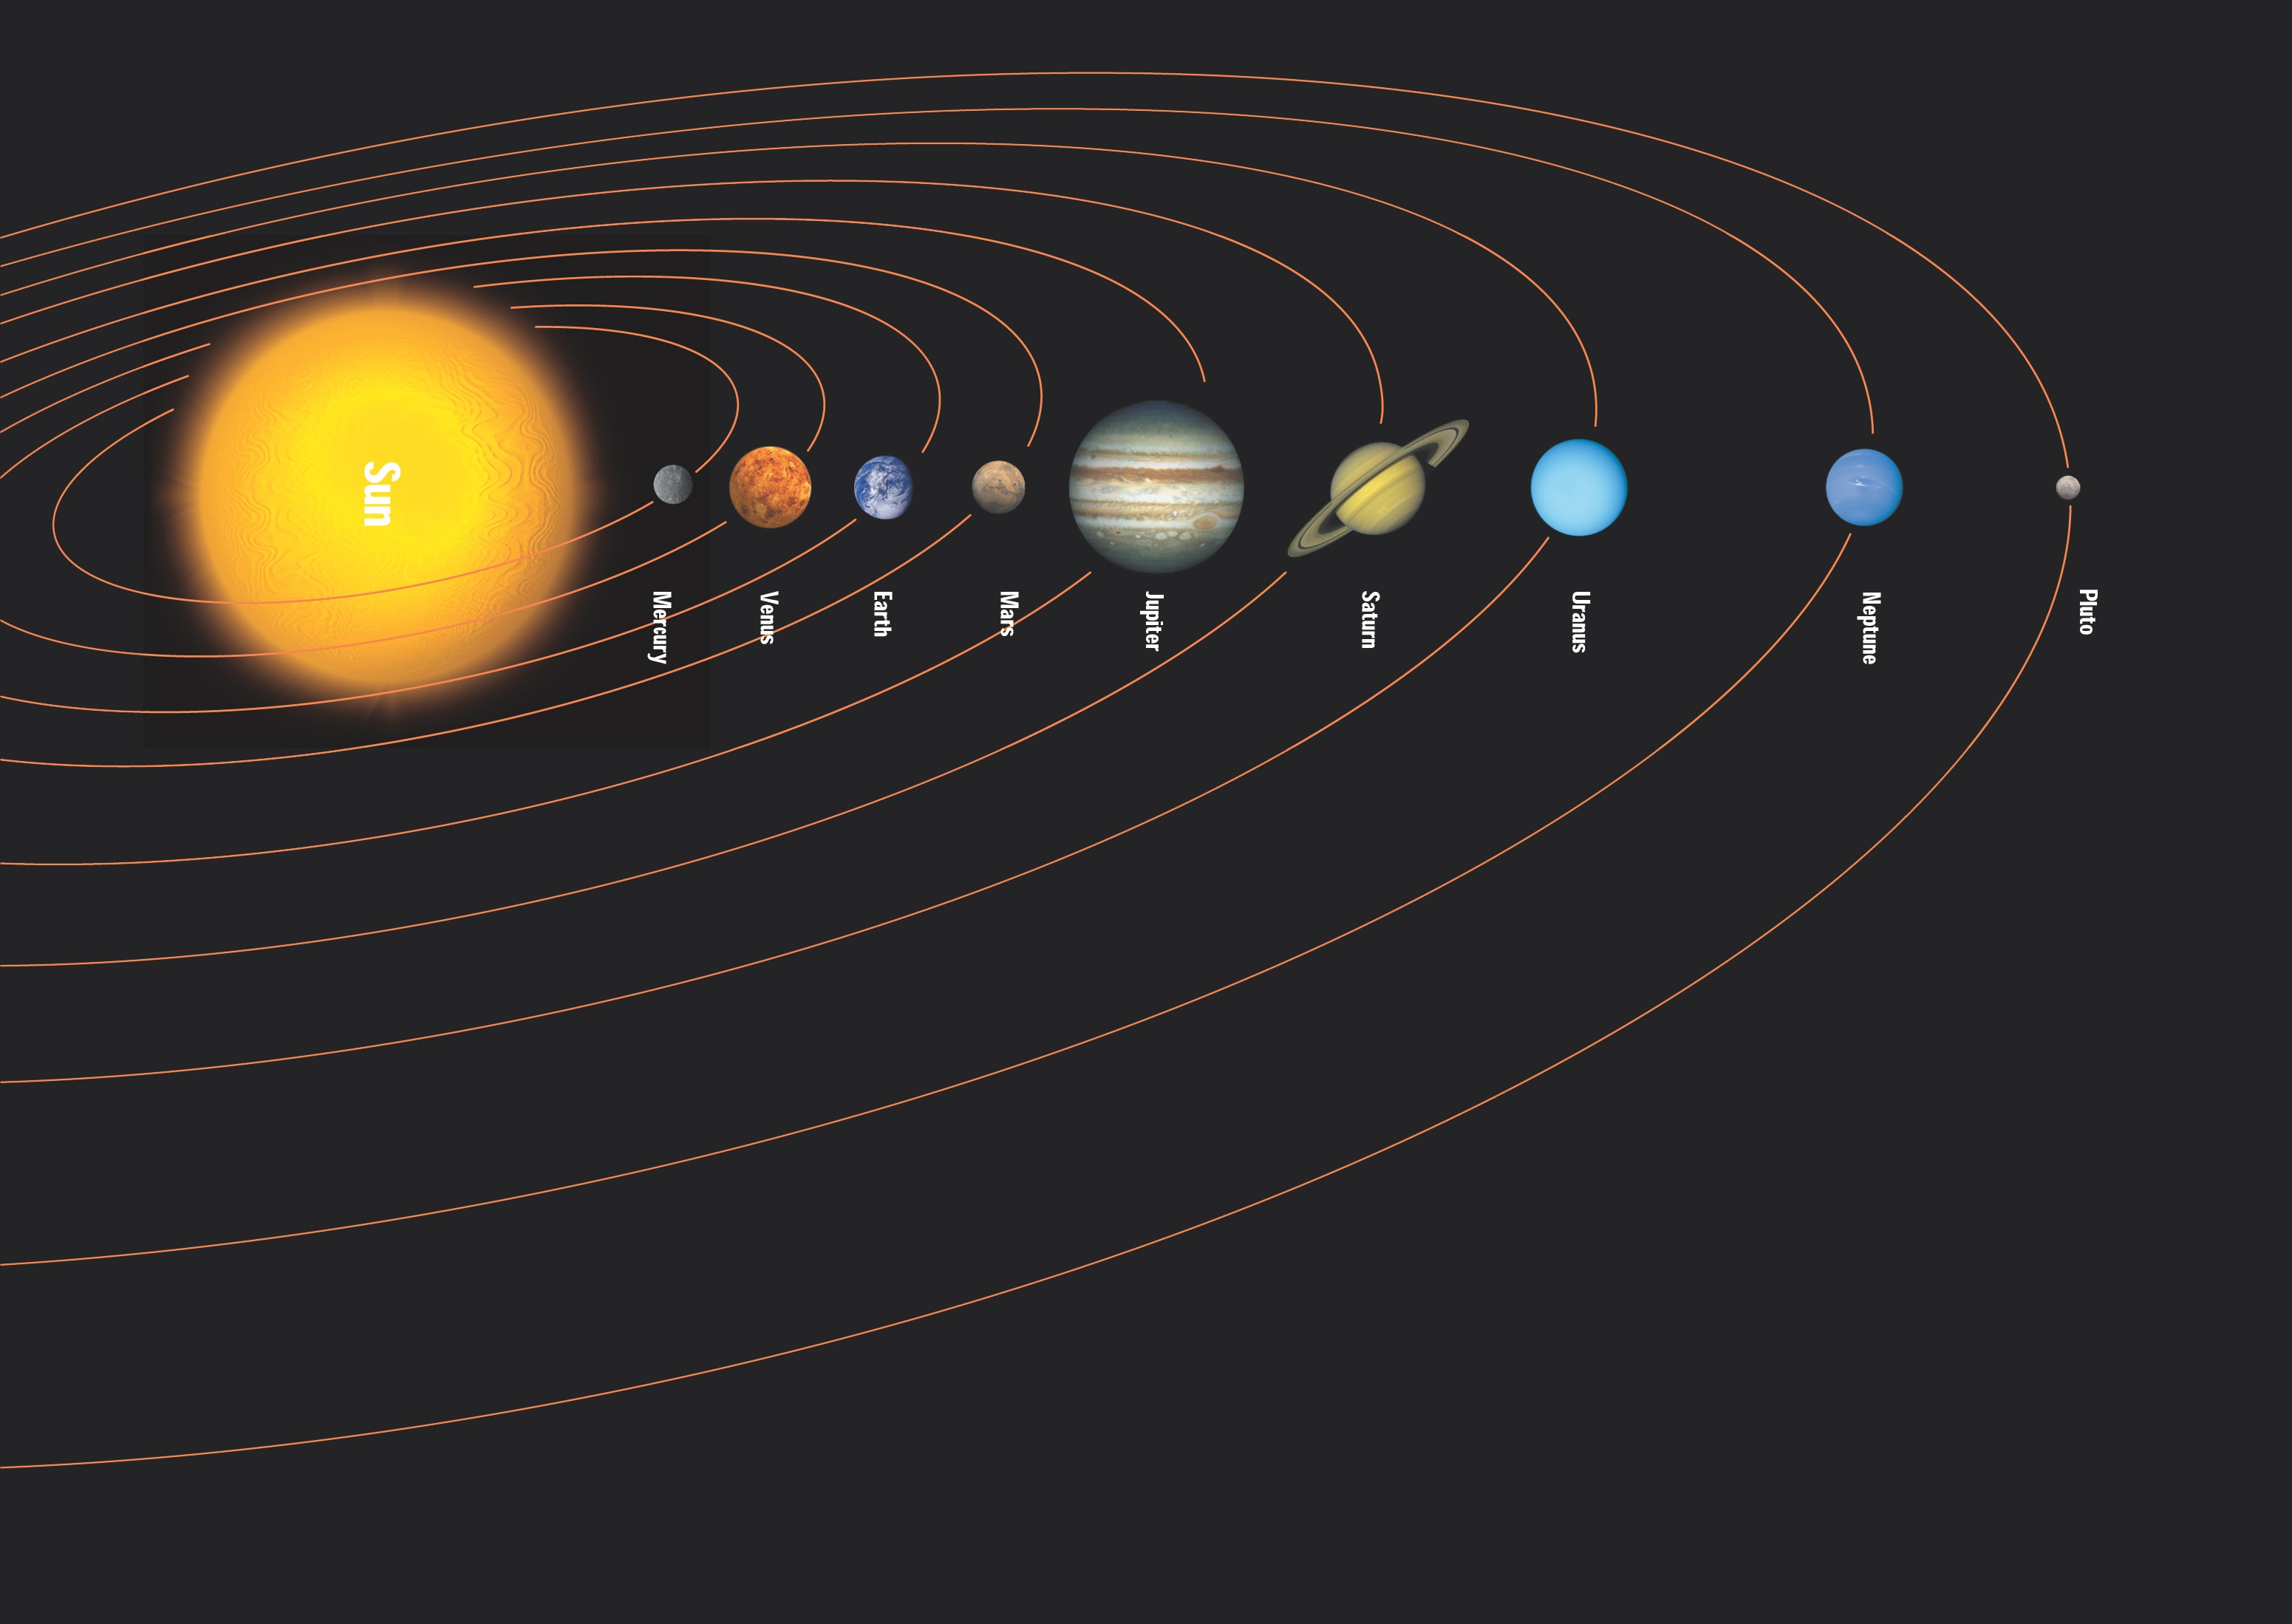 Местоположение планет. Расположение планет солнечной системы. Орбиты планет солнечной системы. Планеты по порядку от солнца. Эллиптические орбиты планет солнечной системы.